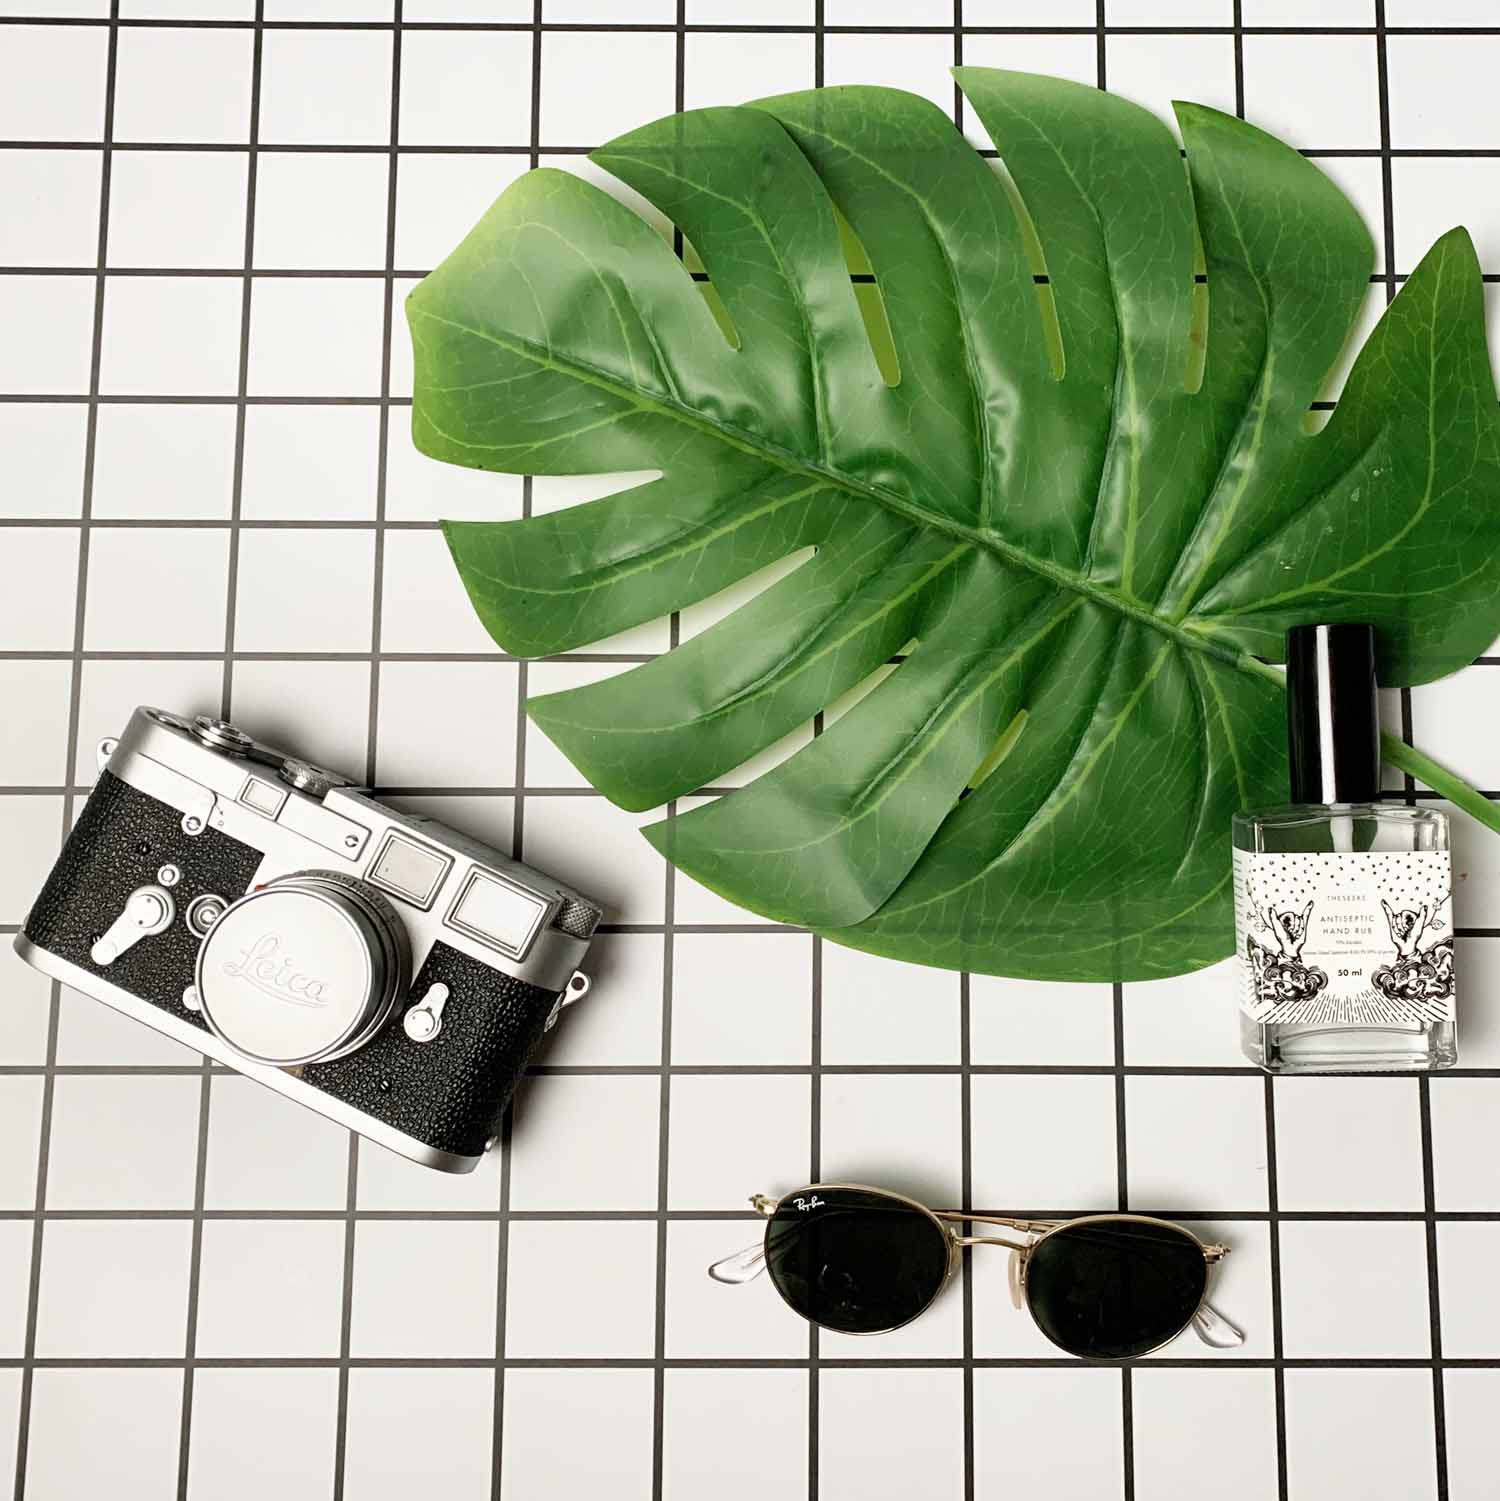 Flat Lay Instagram Backdrop - White 'Glebe' Minimal Grid (56cm x 87cm)